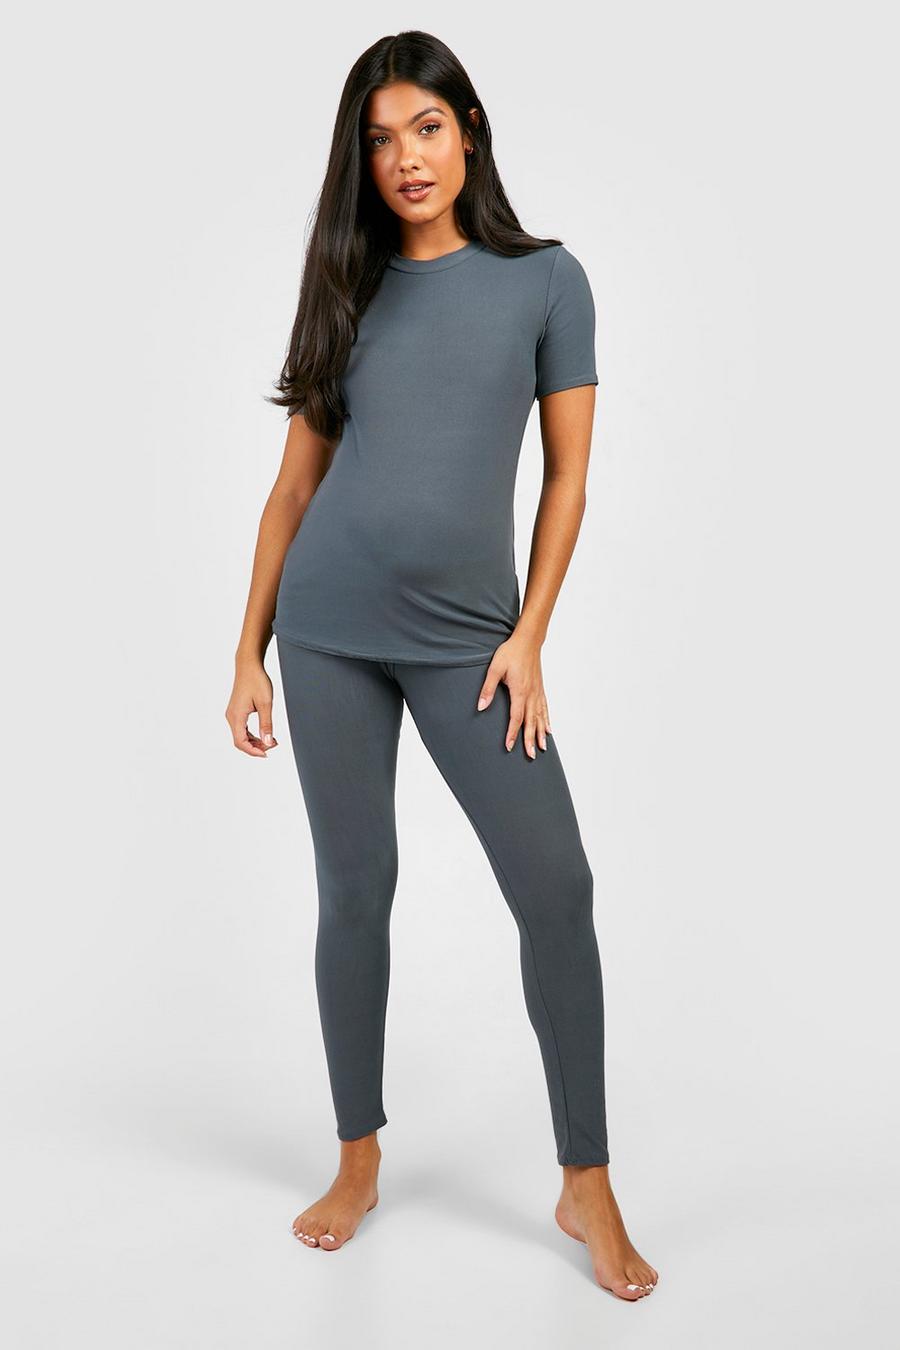 Super Soft Yoga Leggings - Dark Grey Marl, Women's Leggings